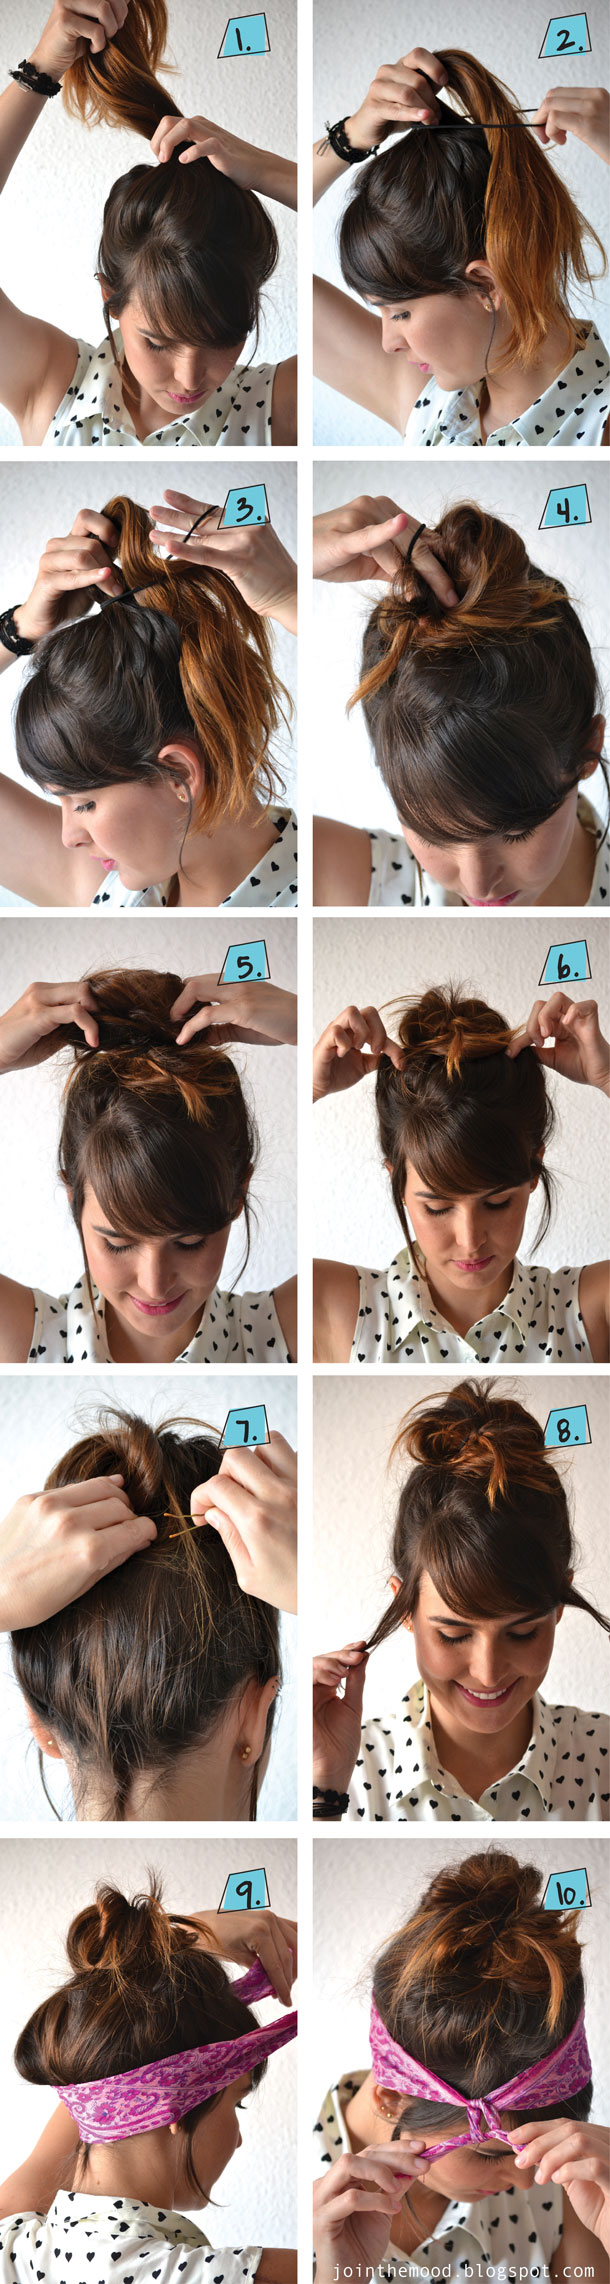 hairstyle-with-bandanapart2.2